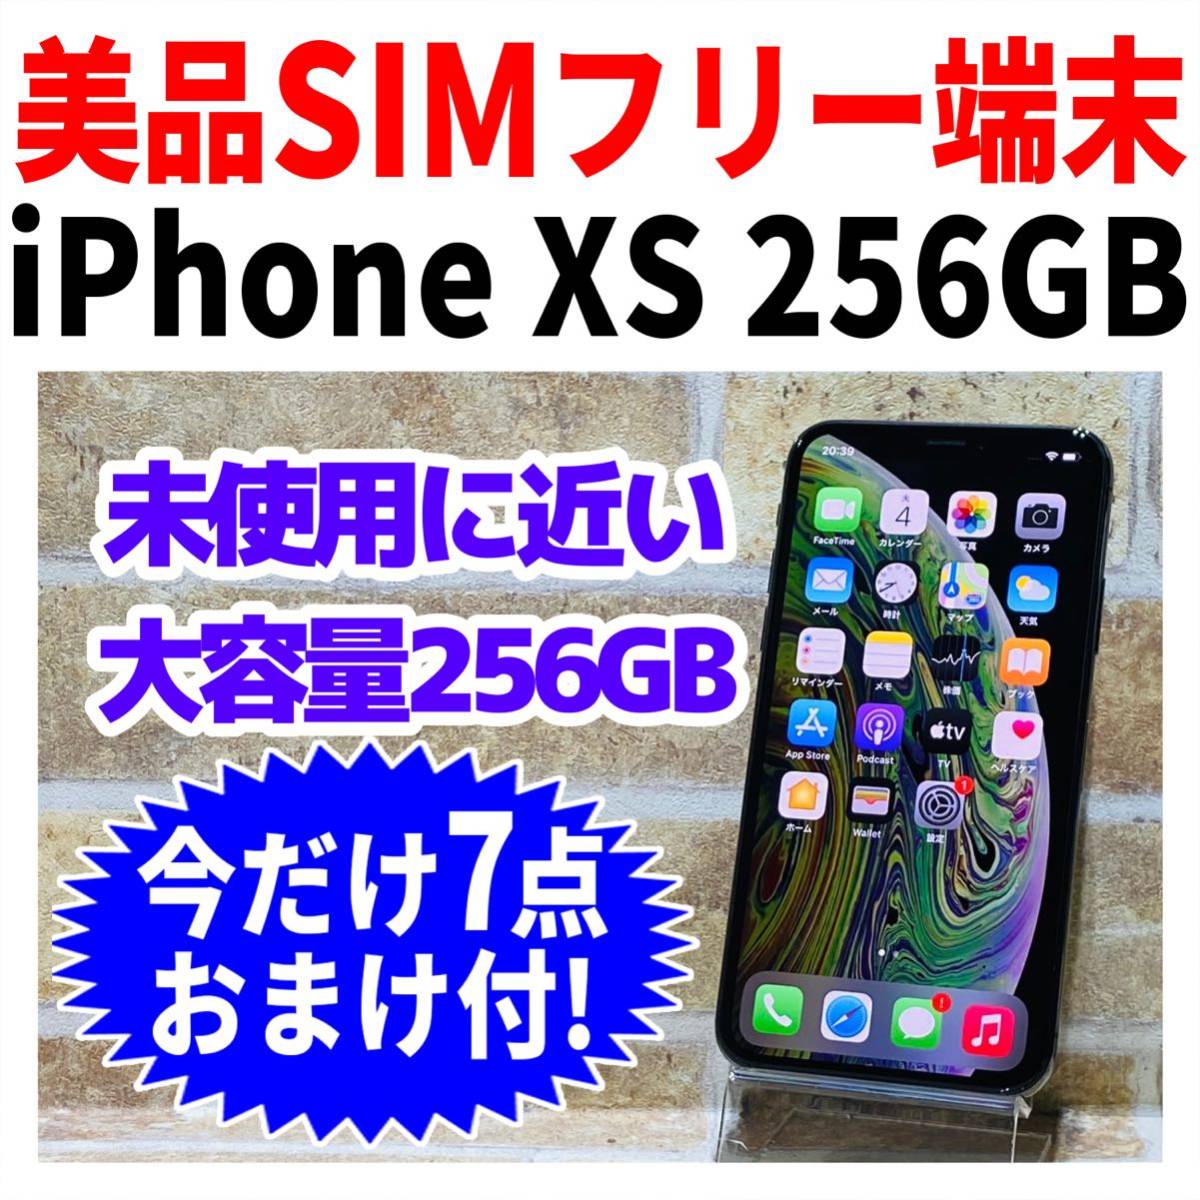 iPhone XS 256GB SIMフリー スペースグレイ-